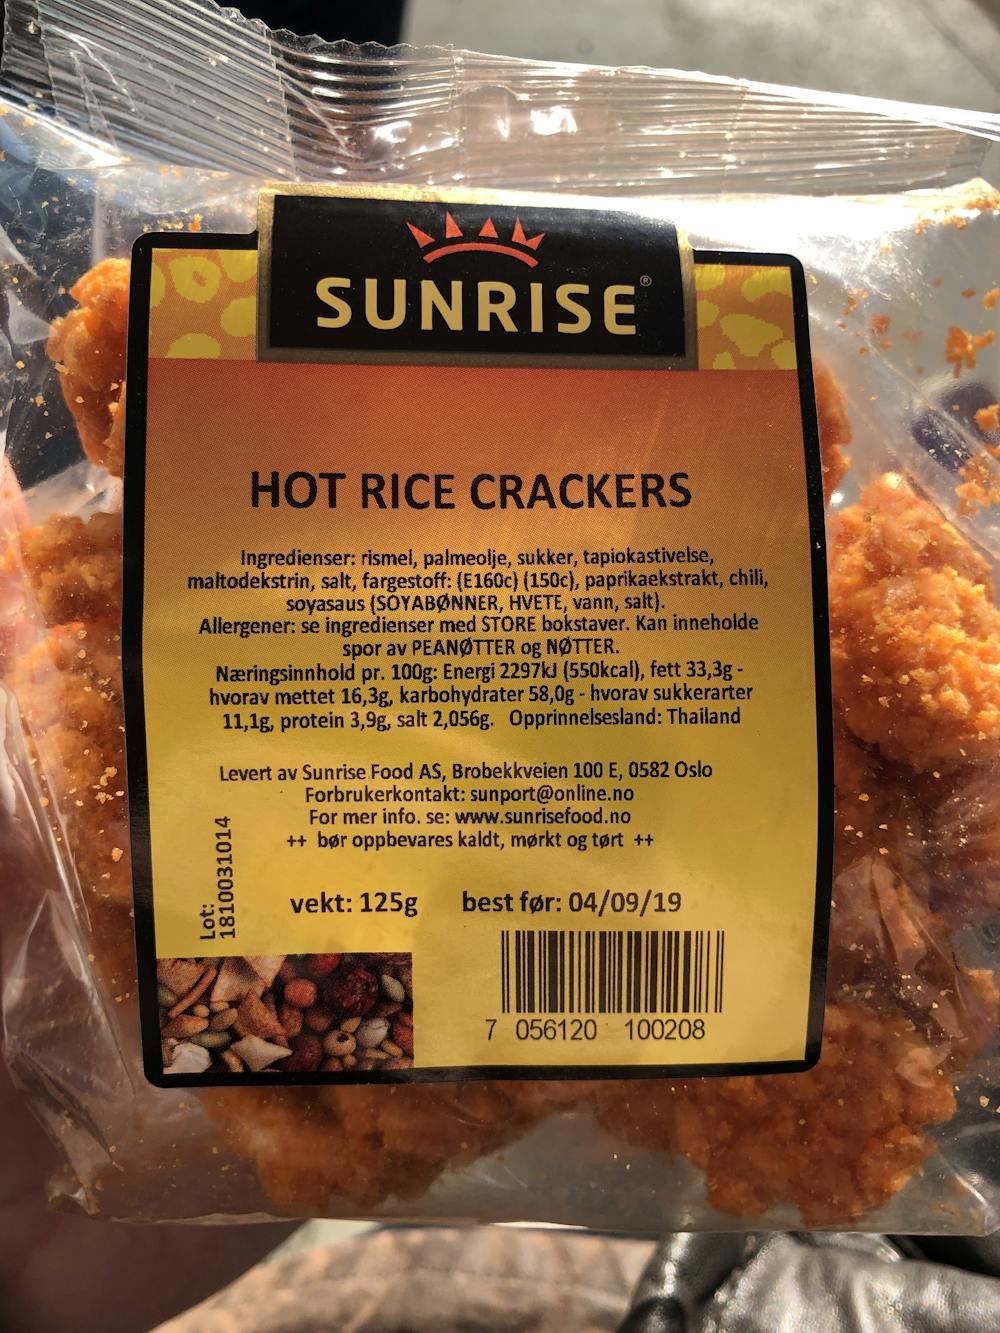 Hot rice crackers, Sunrise